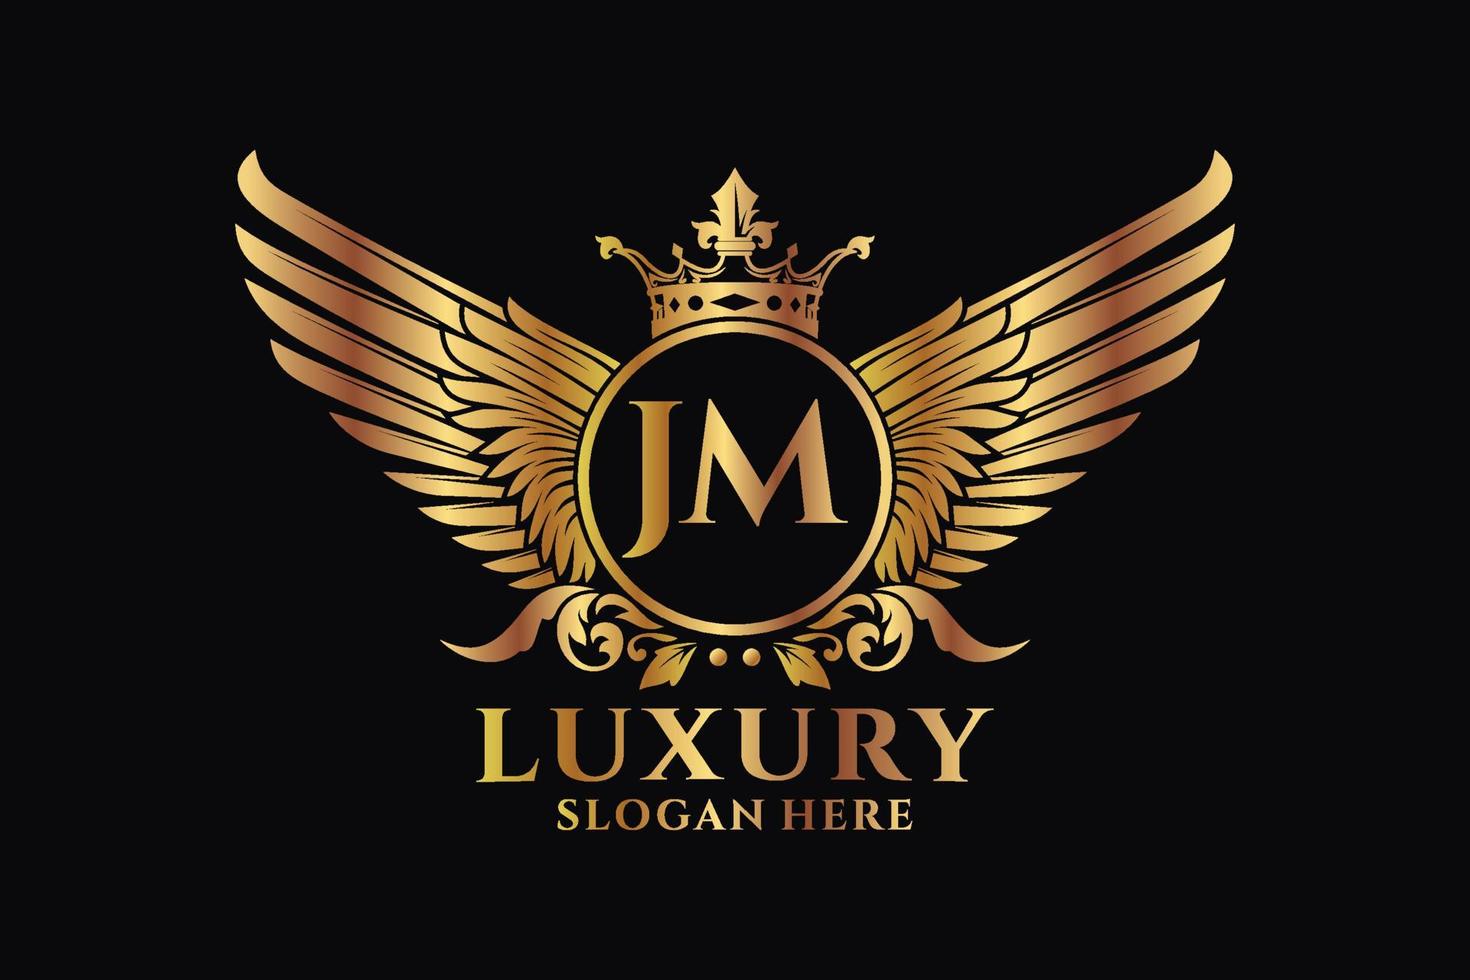 luxe Koninklijk vleugel brief jm kam goud kleur logo vector, zege logo, kam logo, vleugel logo, vector logo sjabloon.